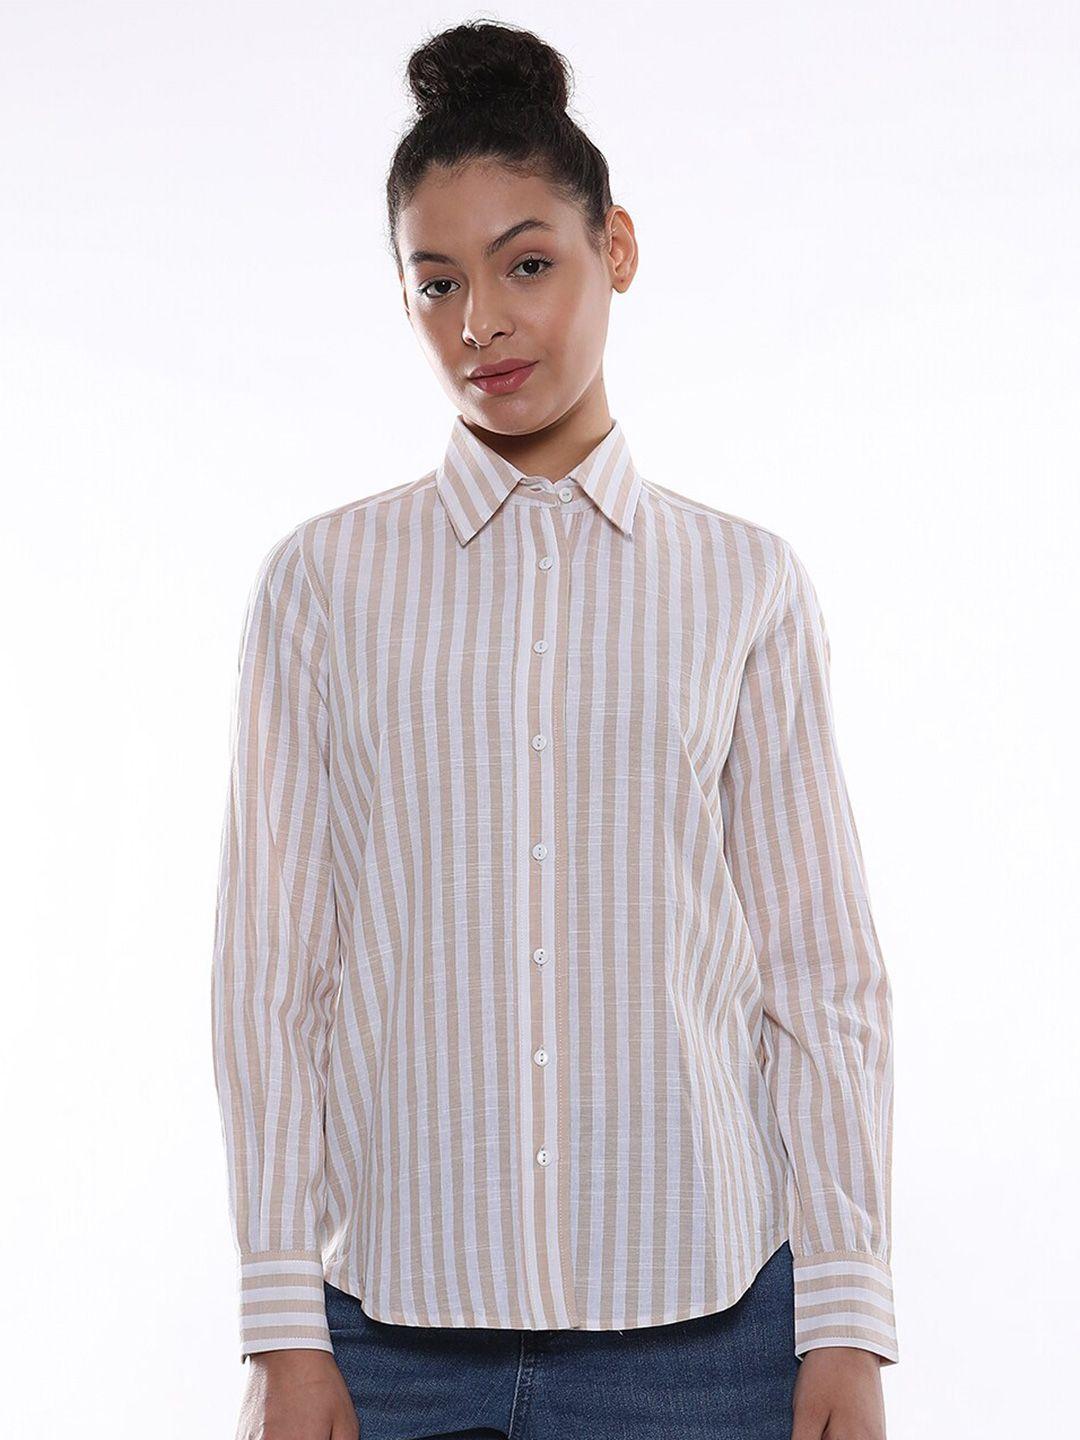 gazillion vertical stripes striped spread collar comfort cotton casual shirt